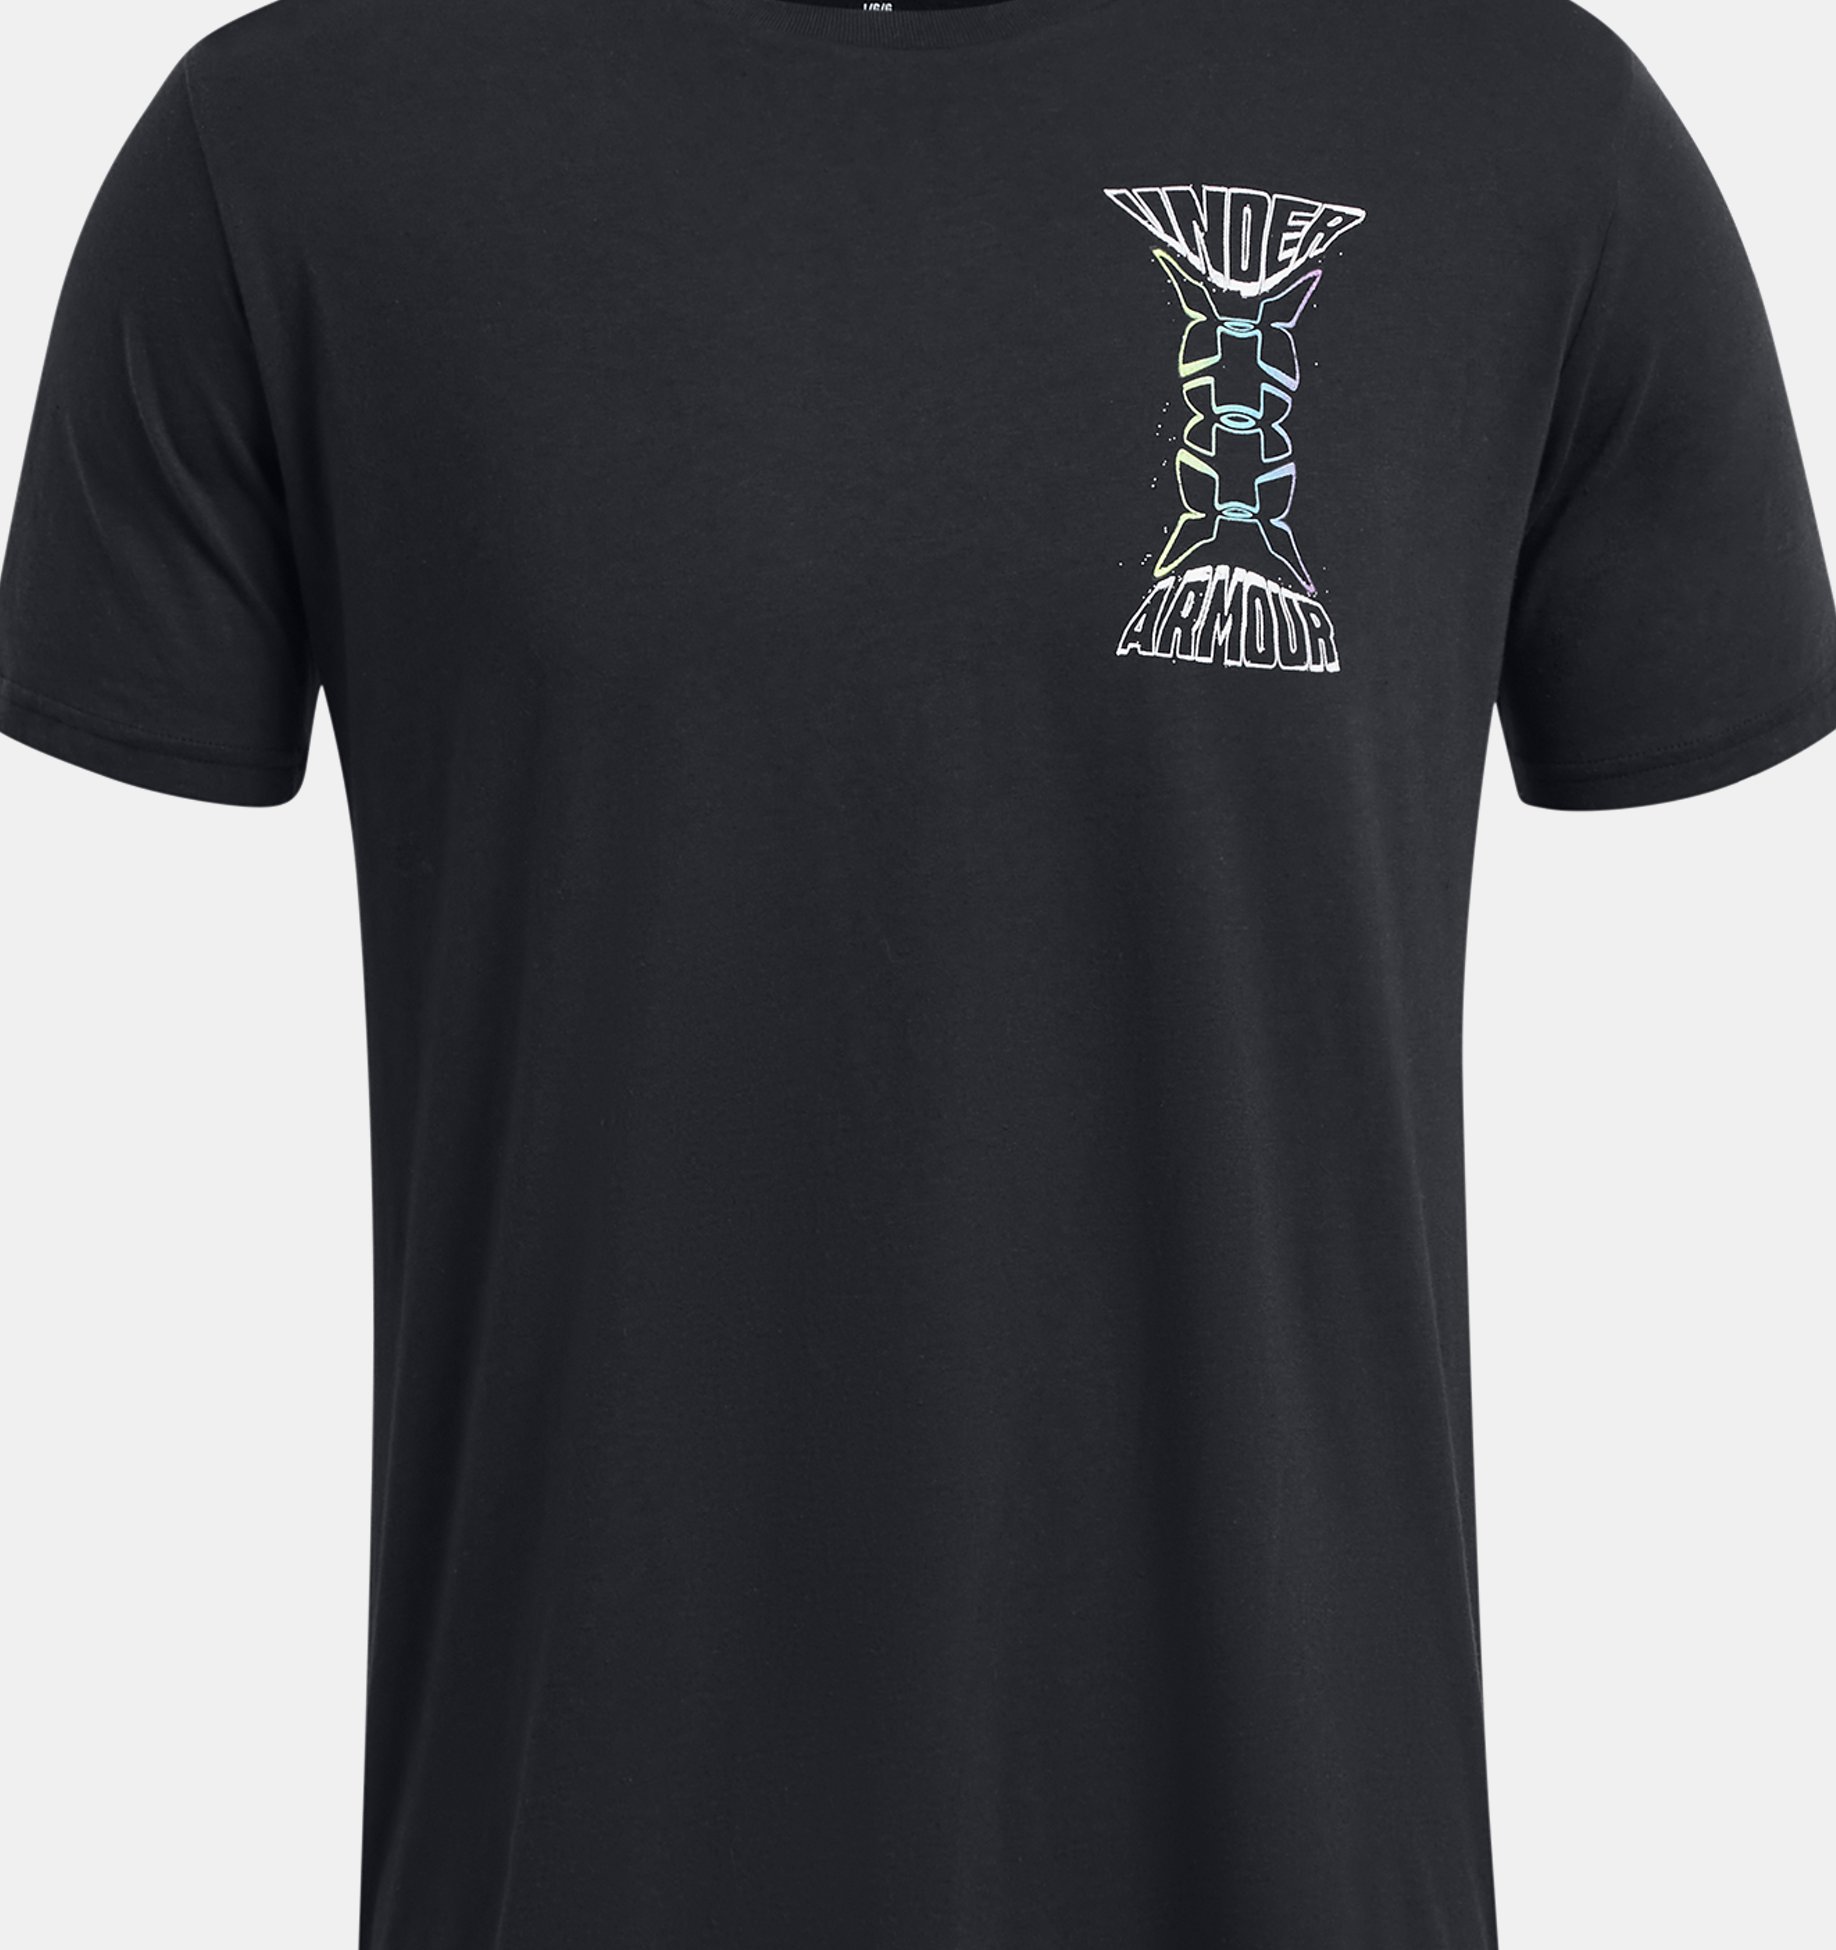 Under Armour Perpetual Powerprint Half Sleeve Shirt Black/Metal 1320980-002  - Free Shipping at LASC